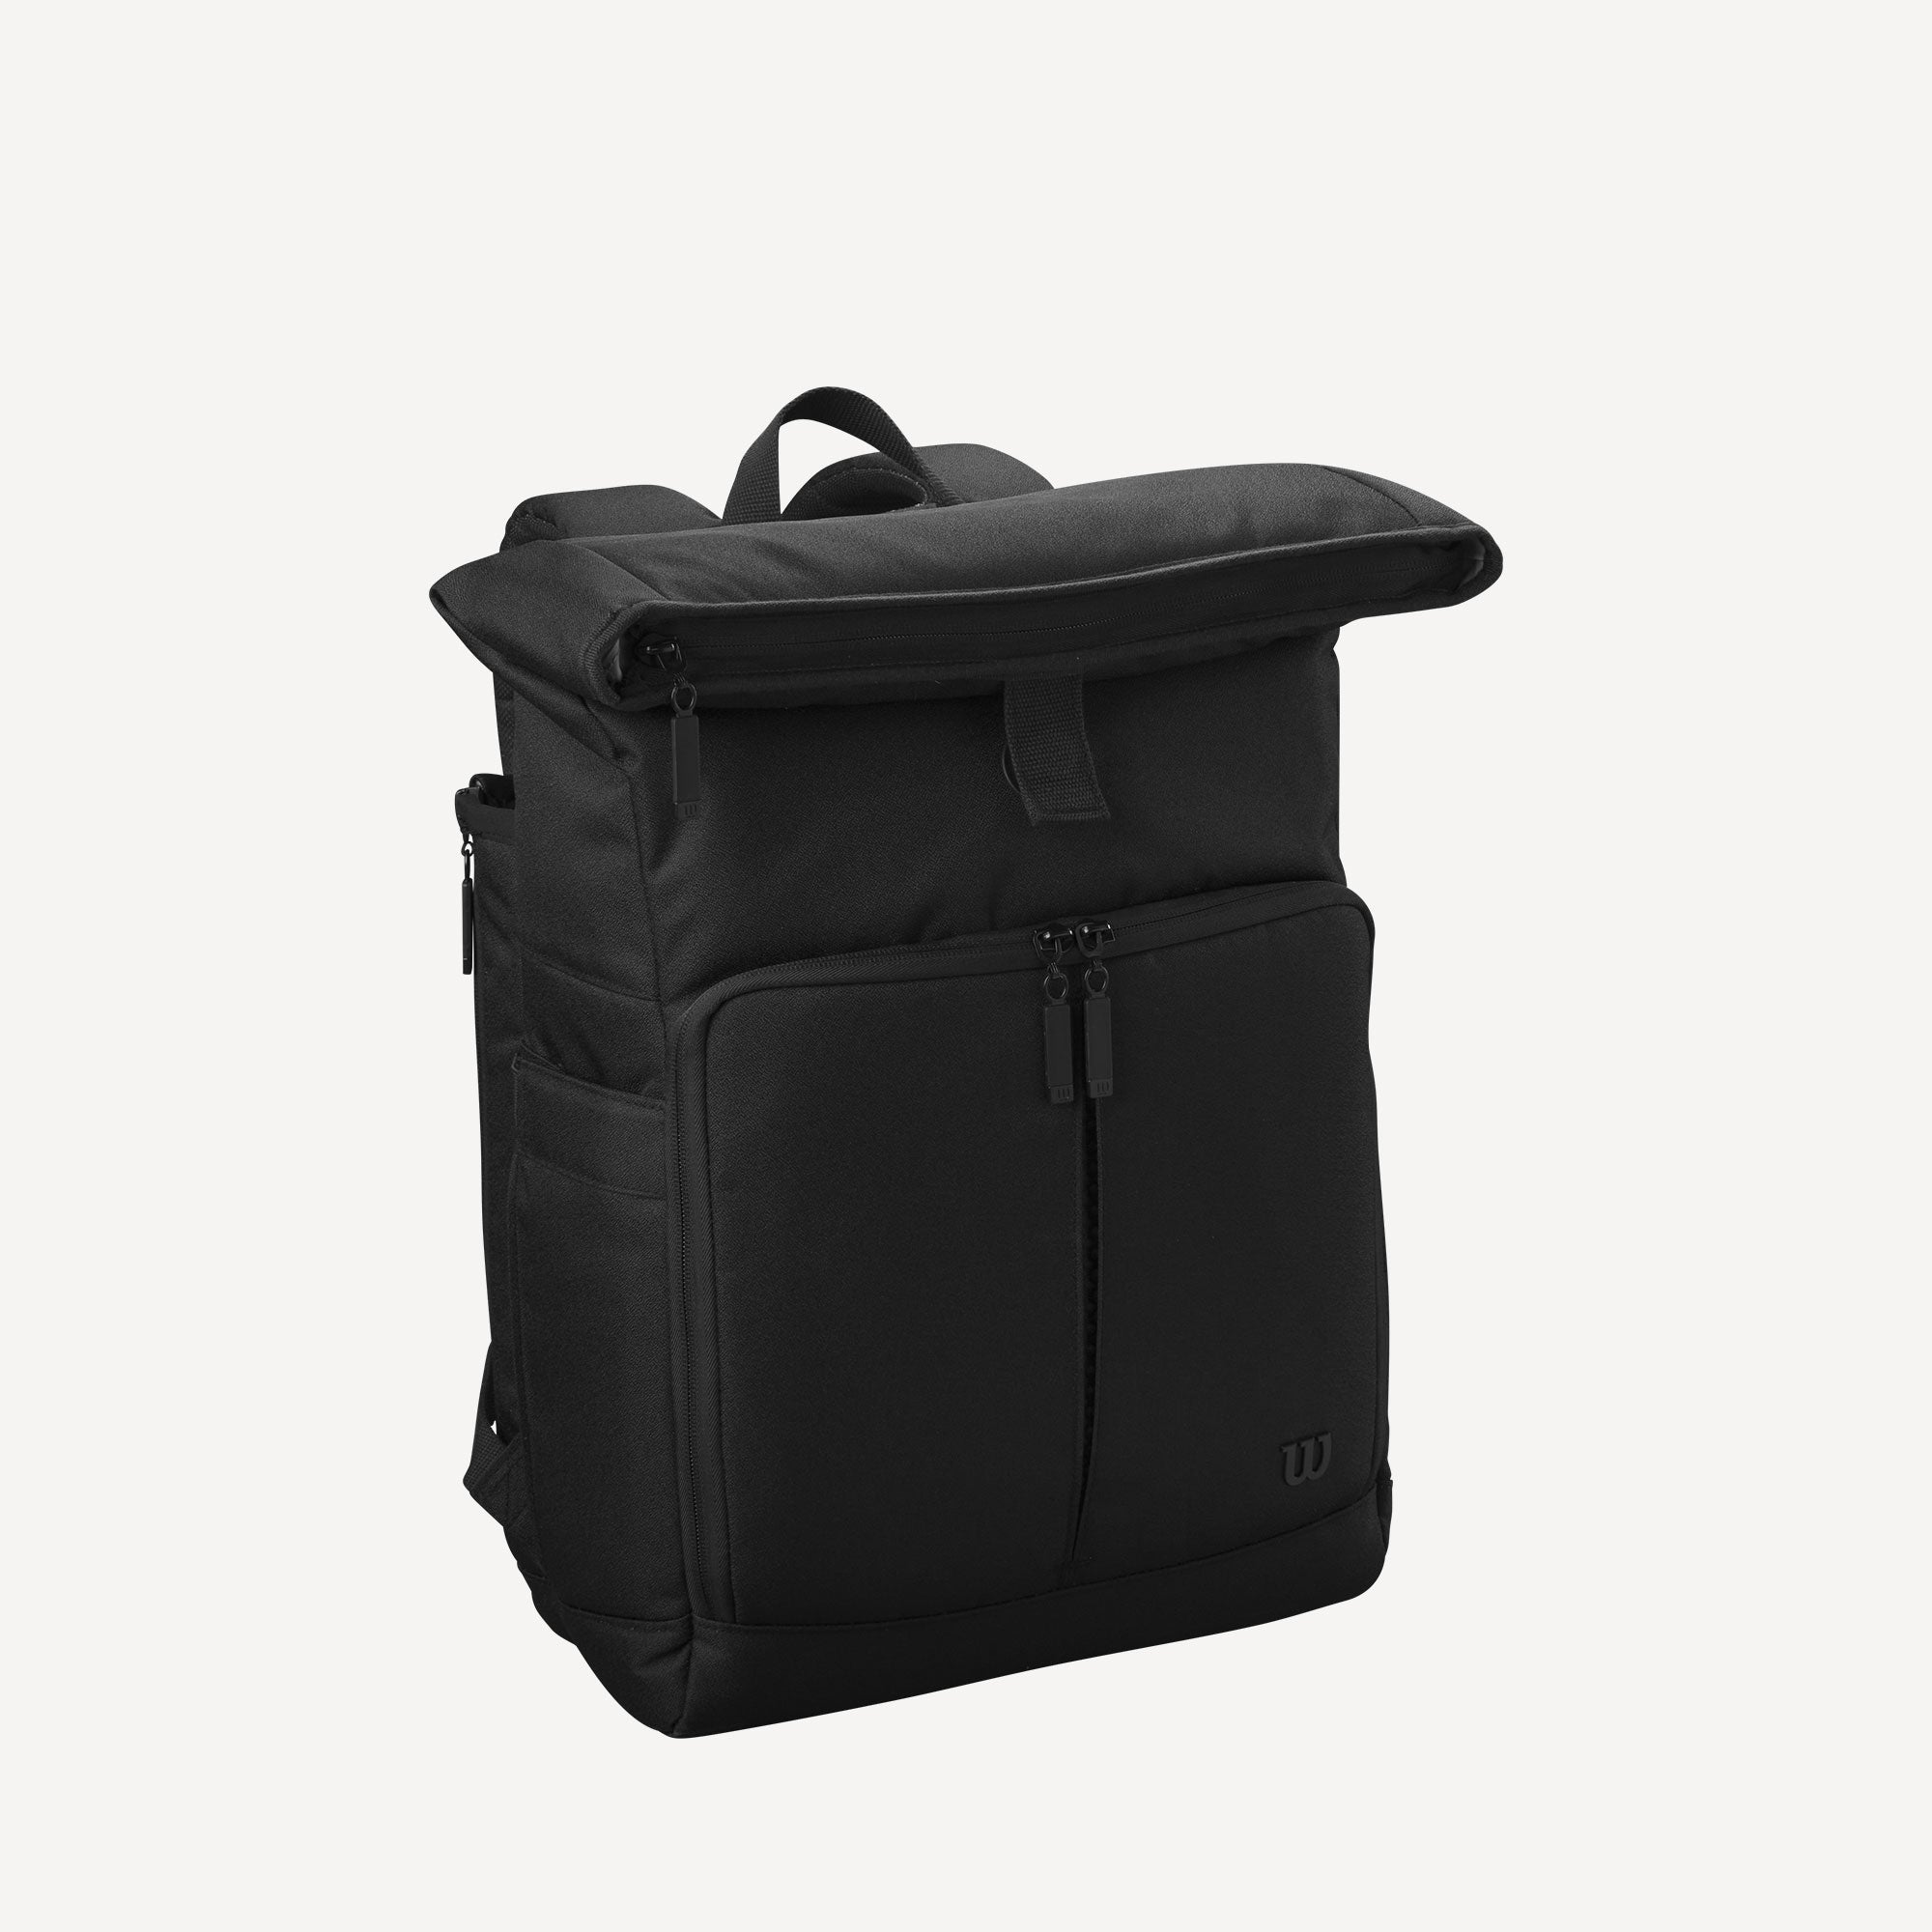 Wilson Lifestyle Foldover Tennis Backpack - Black (1)